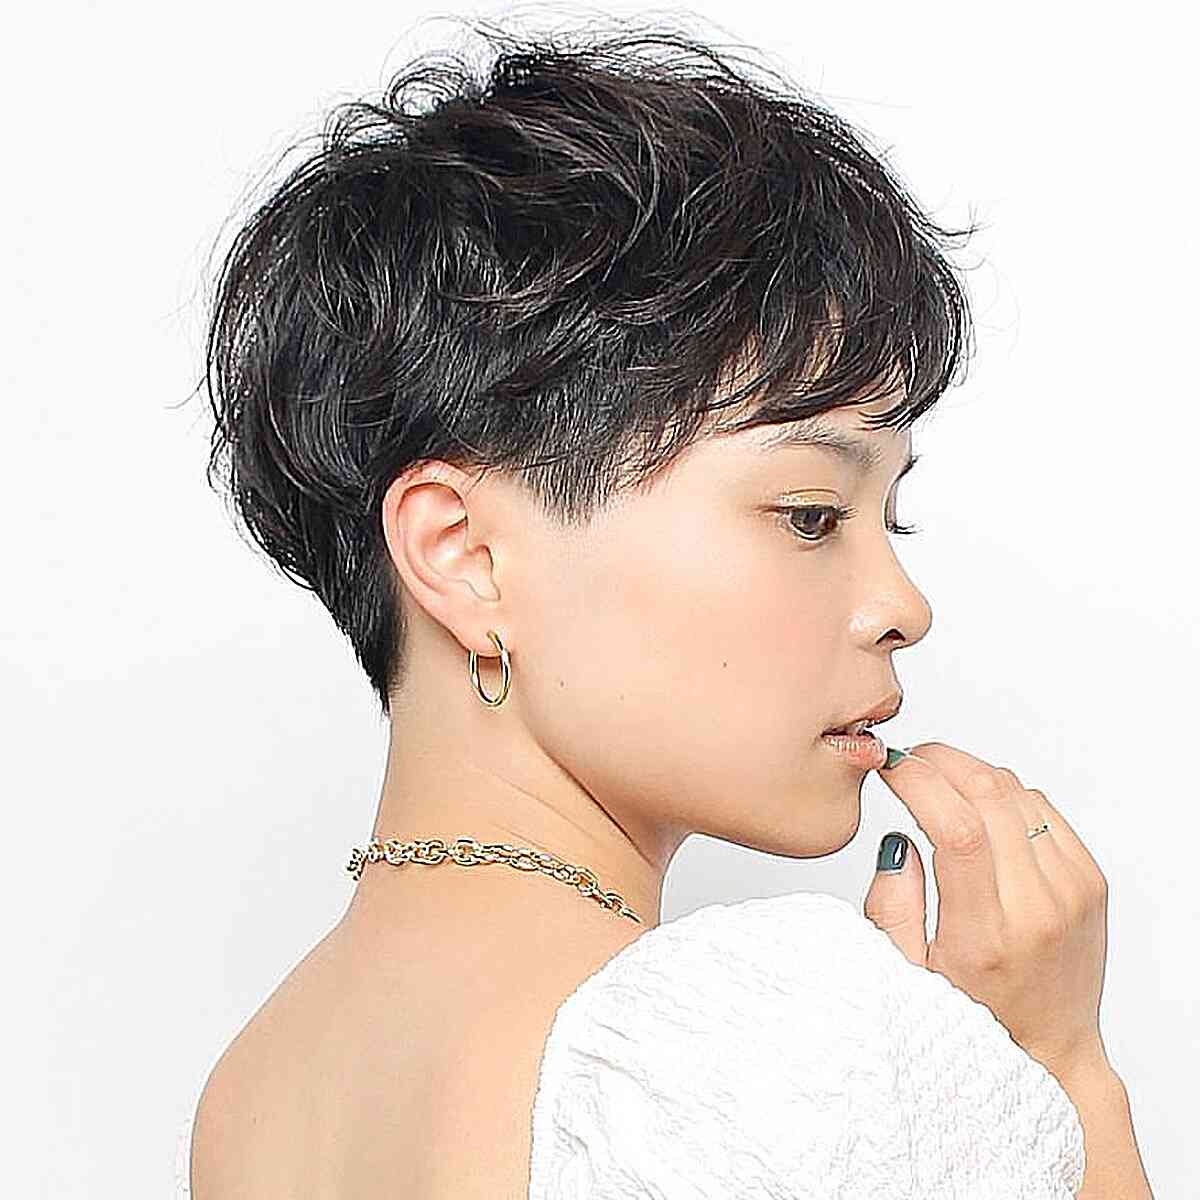 Short Layered Haircut For an Asian Girl